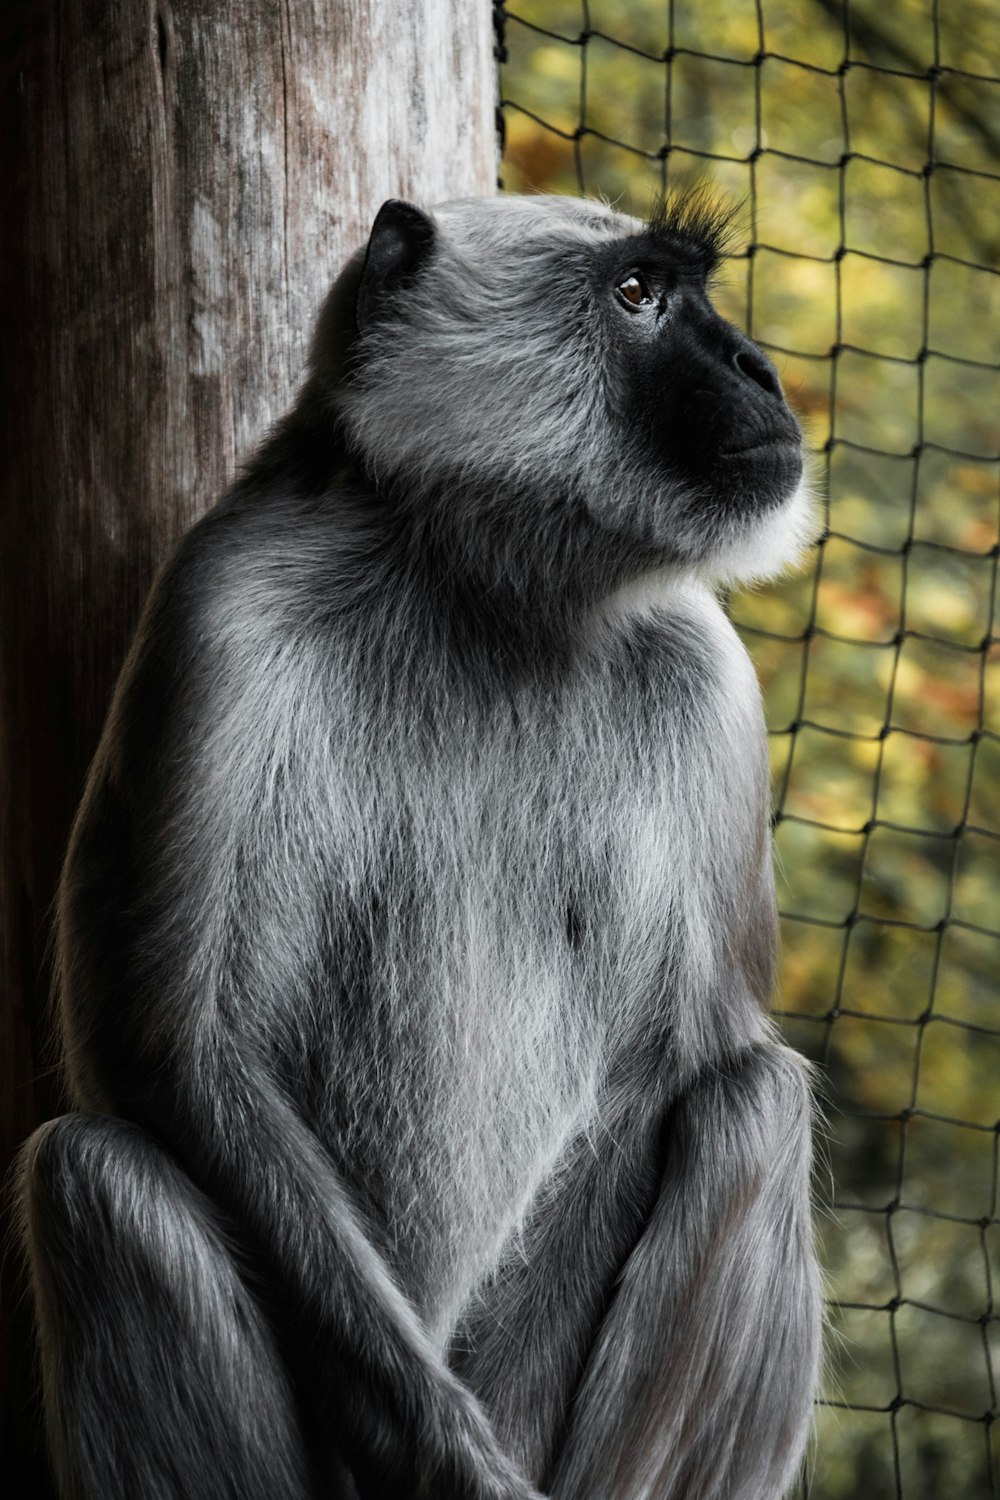 grey and black monkey sitting inside cage